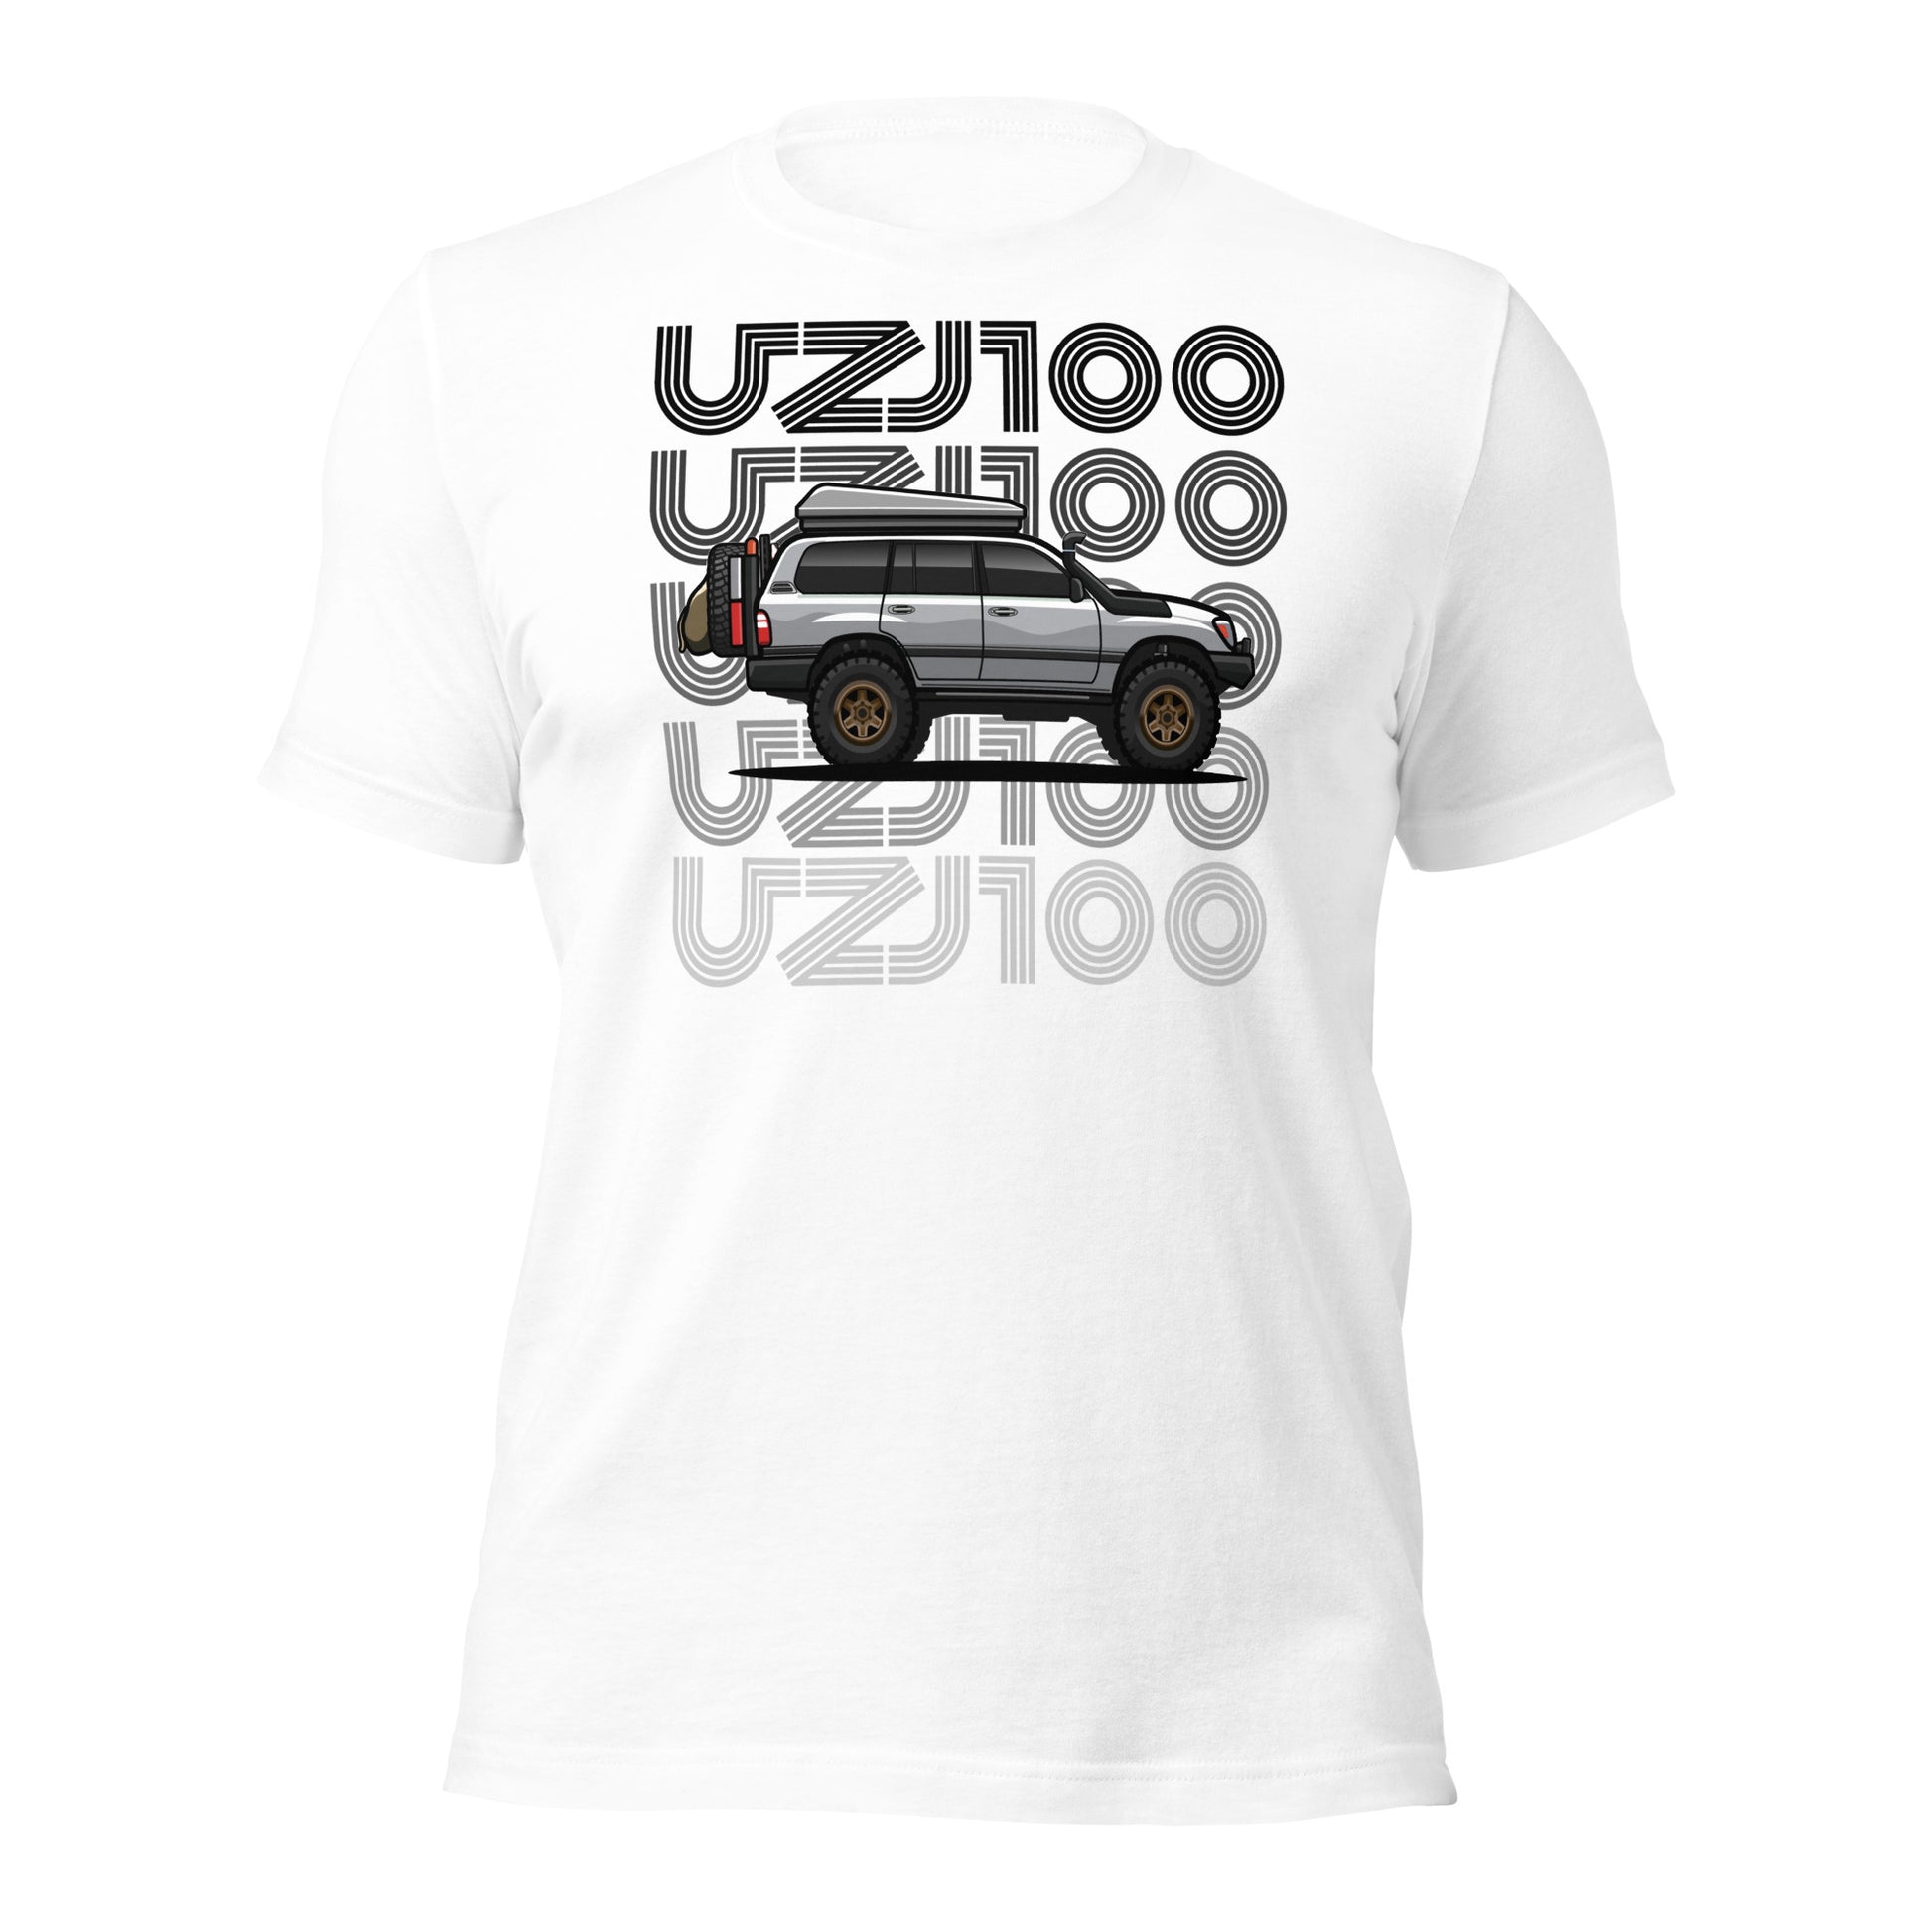 UZJ100 - Tshirt - Artists Collab Series 02 - Merch-Mkt